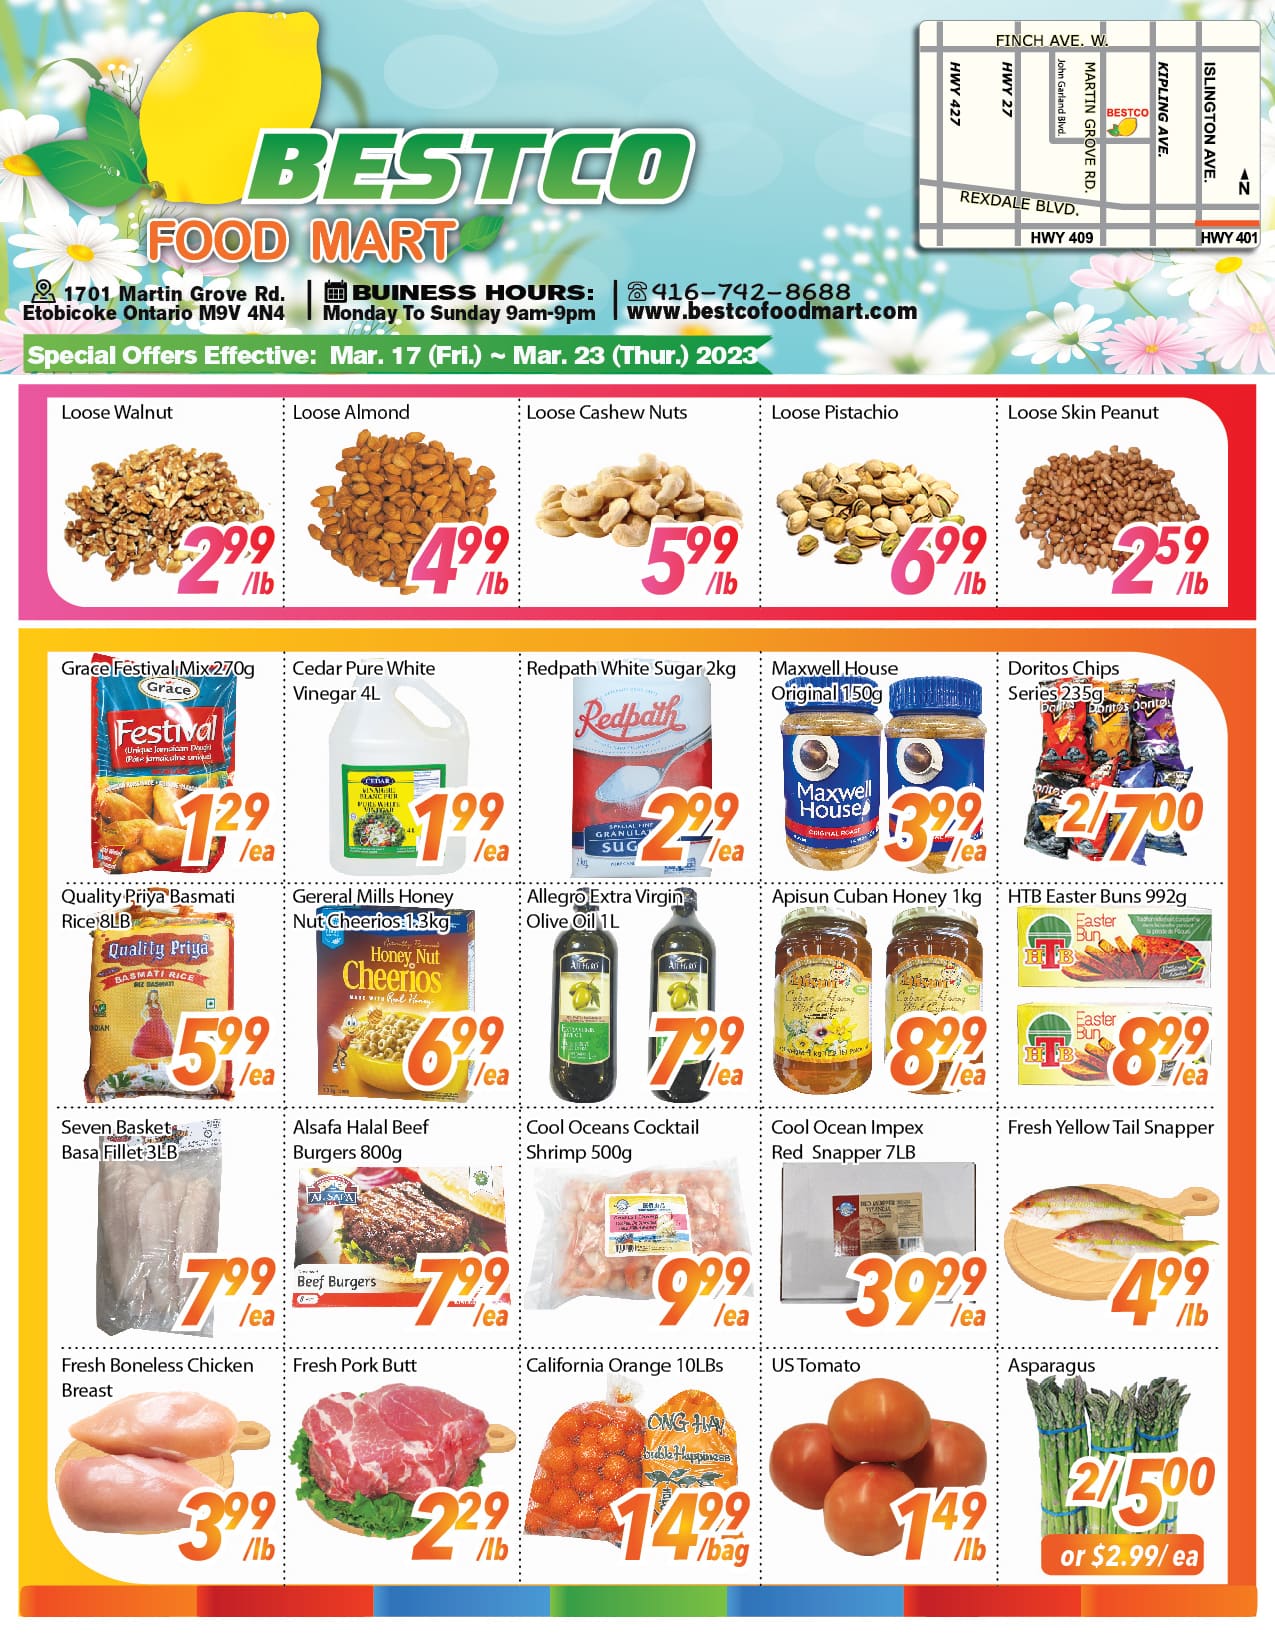 Bestco Food Mart - Etobicoke - Weekly Flyer Specials - Page 1